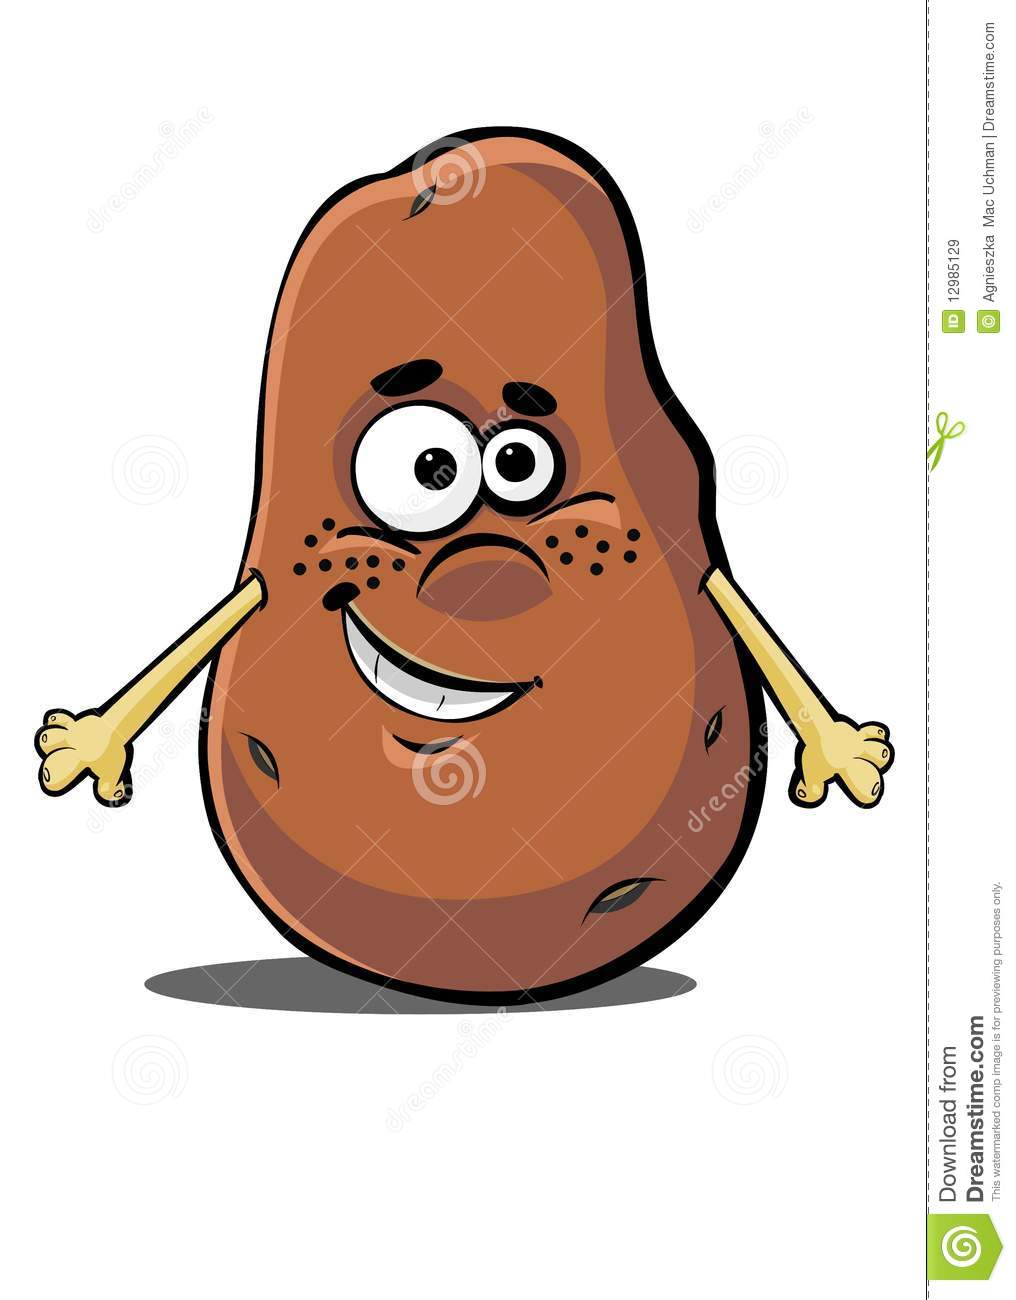 Happy Potato Royalty Free Stock Images   Image  12985129